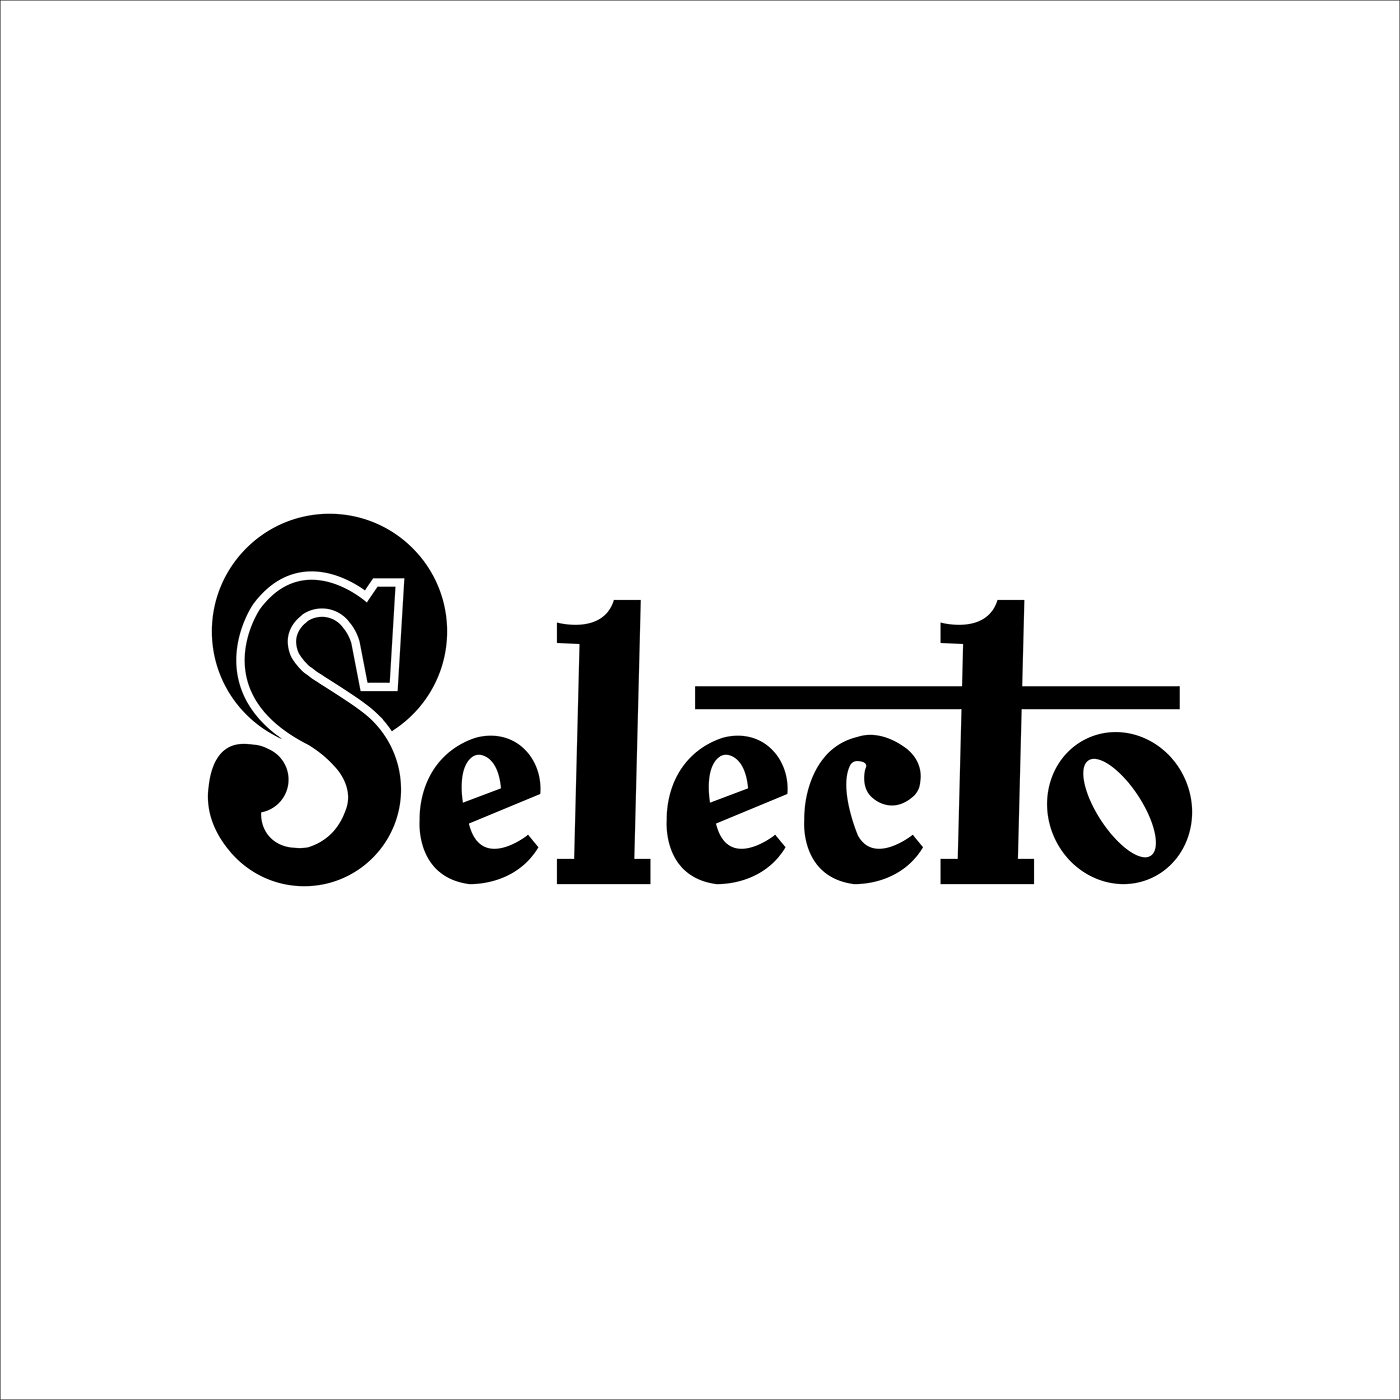 Selecto Advertisers Logo, Business Card, Social Media designs by MOHSIN FIAZ